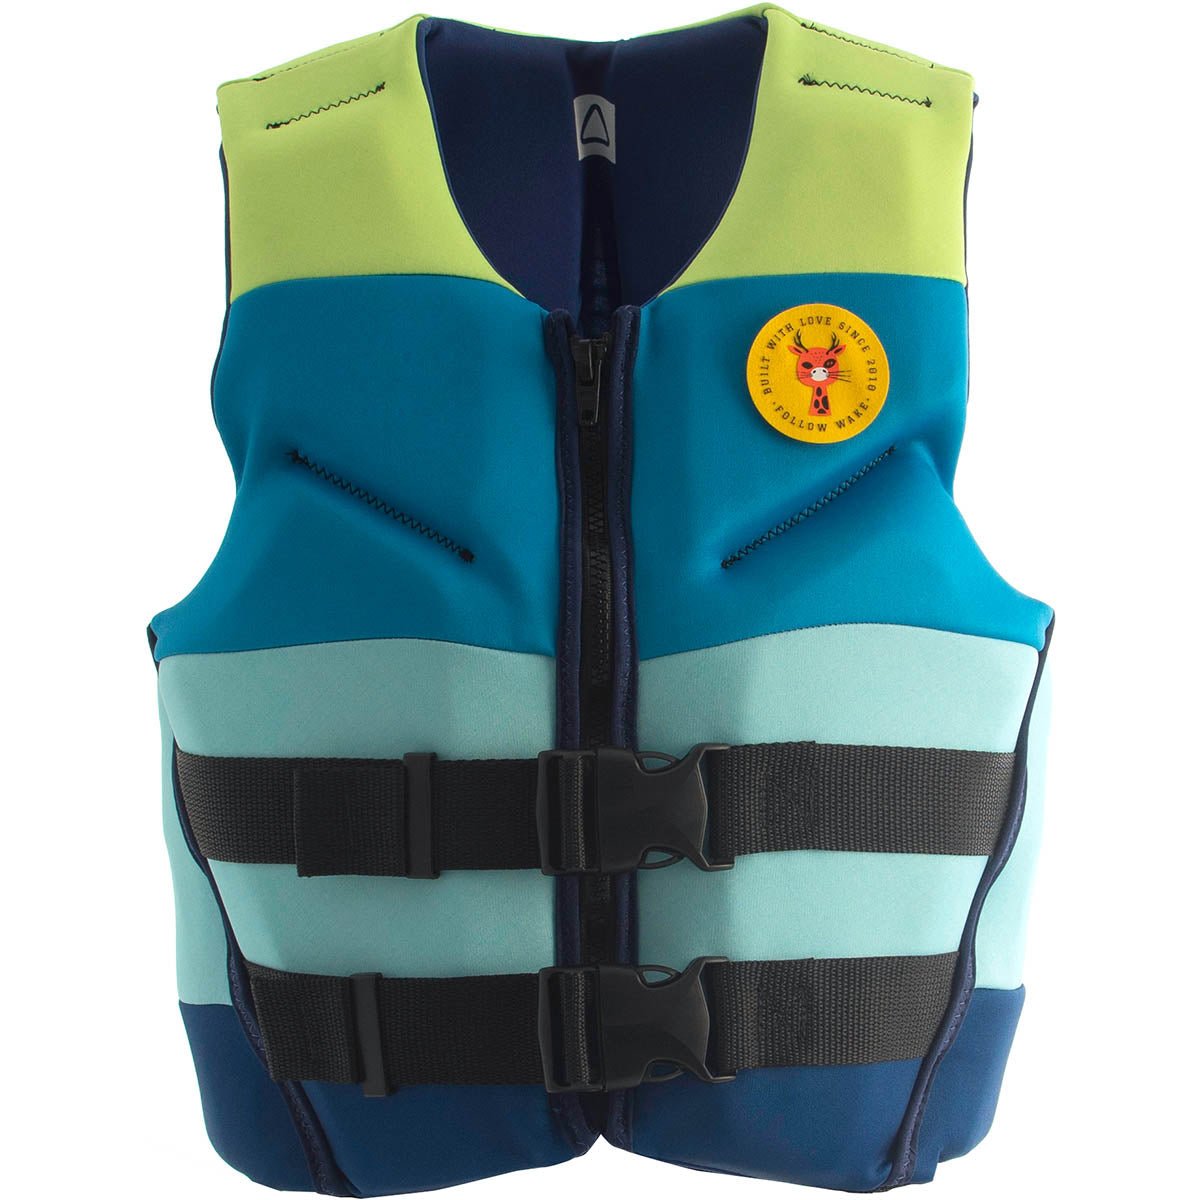 Follow Pop Youth CGA Life Jacket in Blue - BoardCo